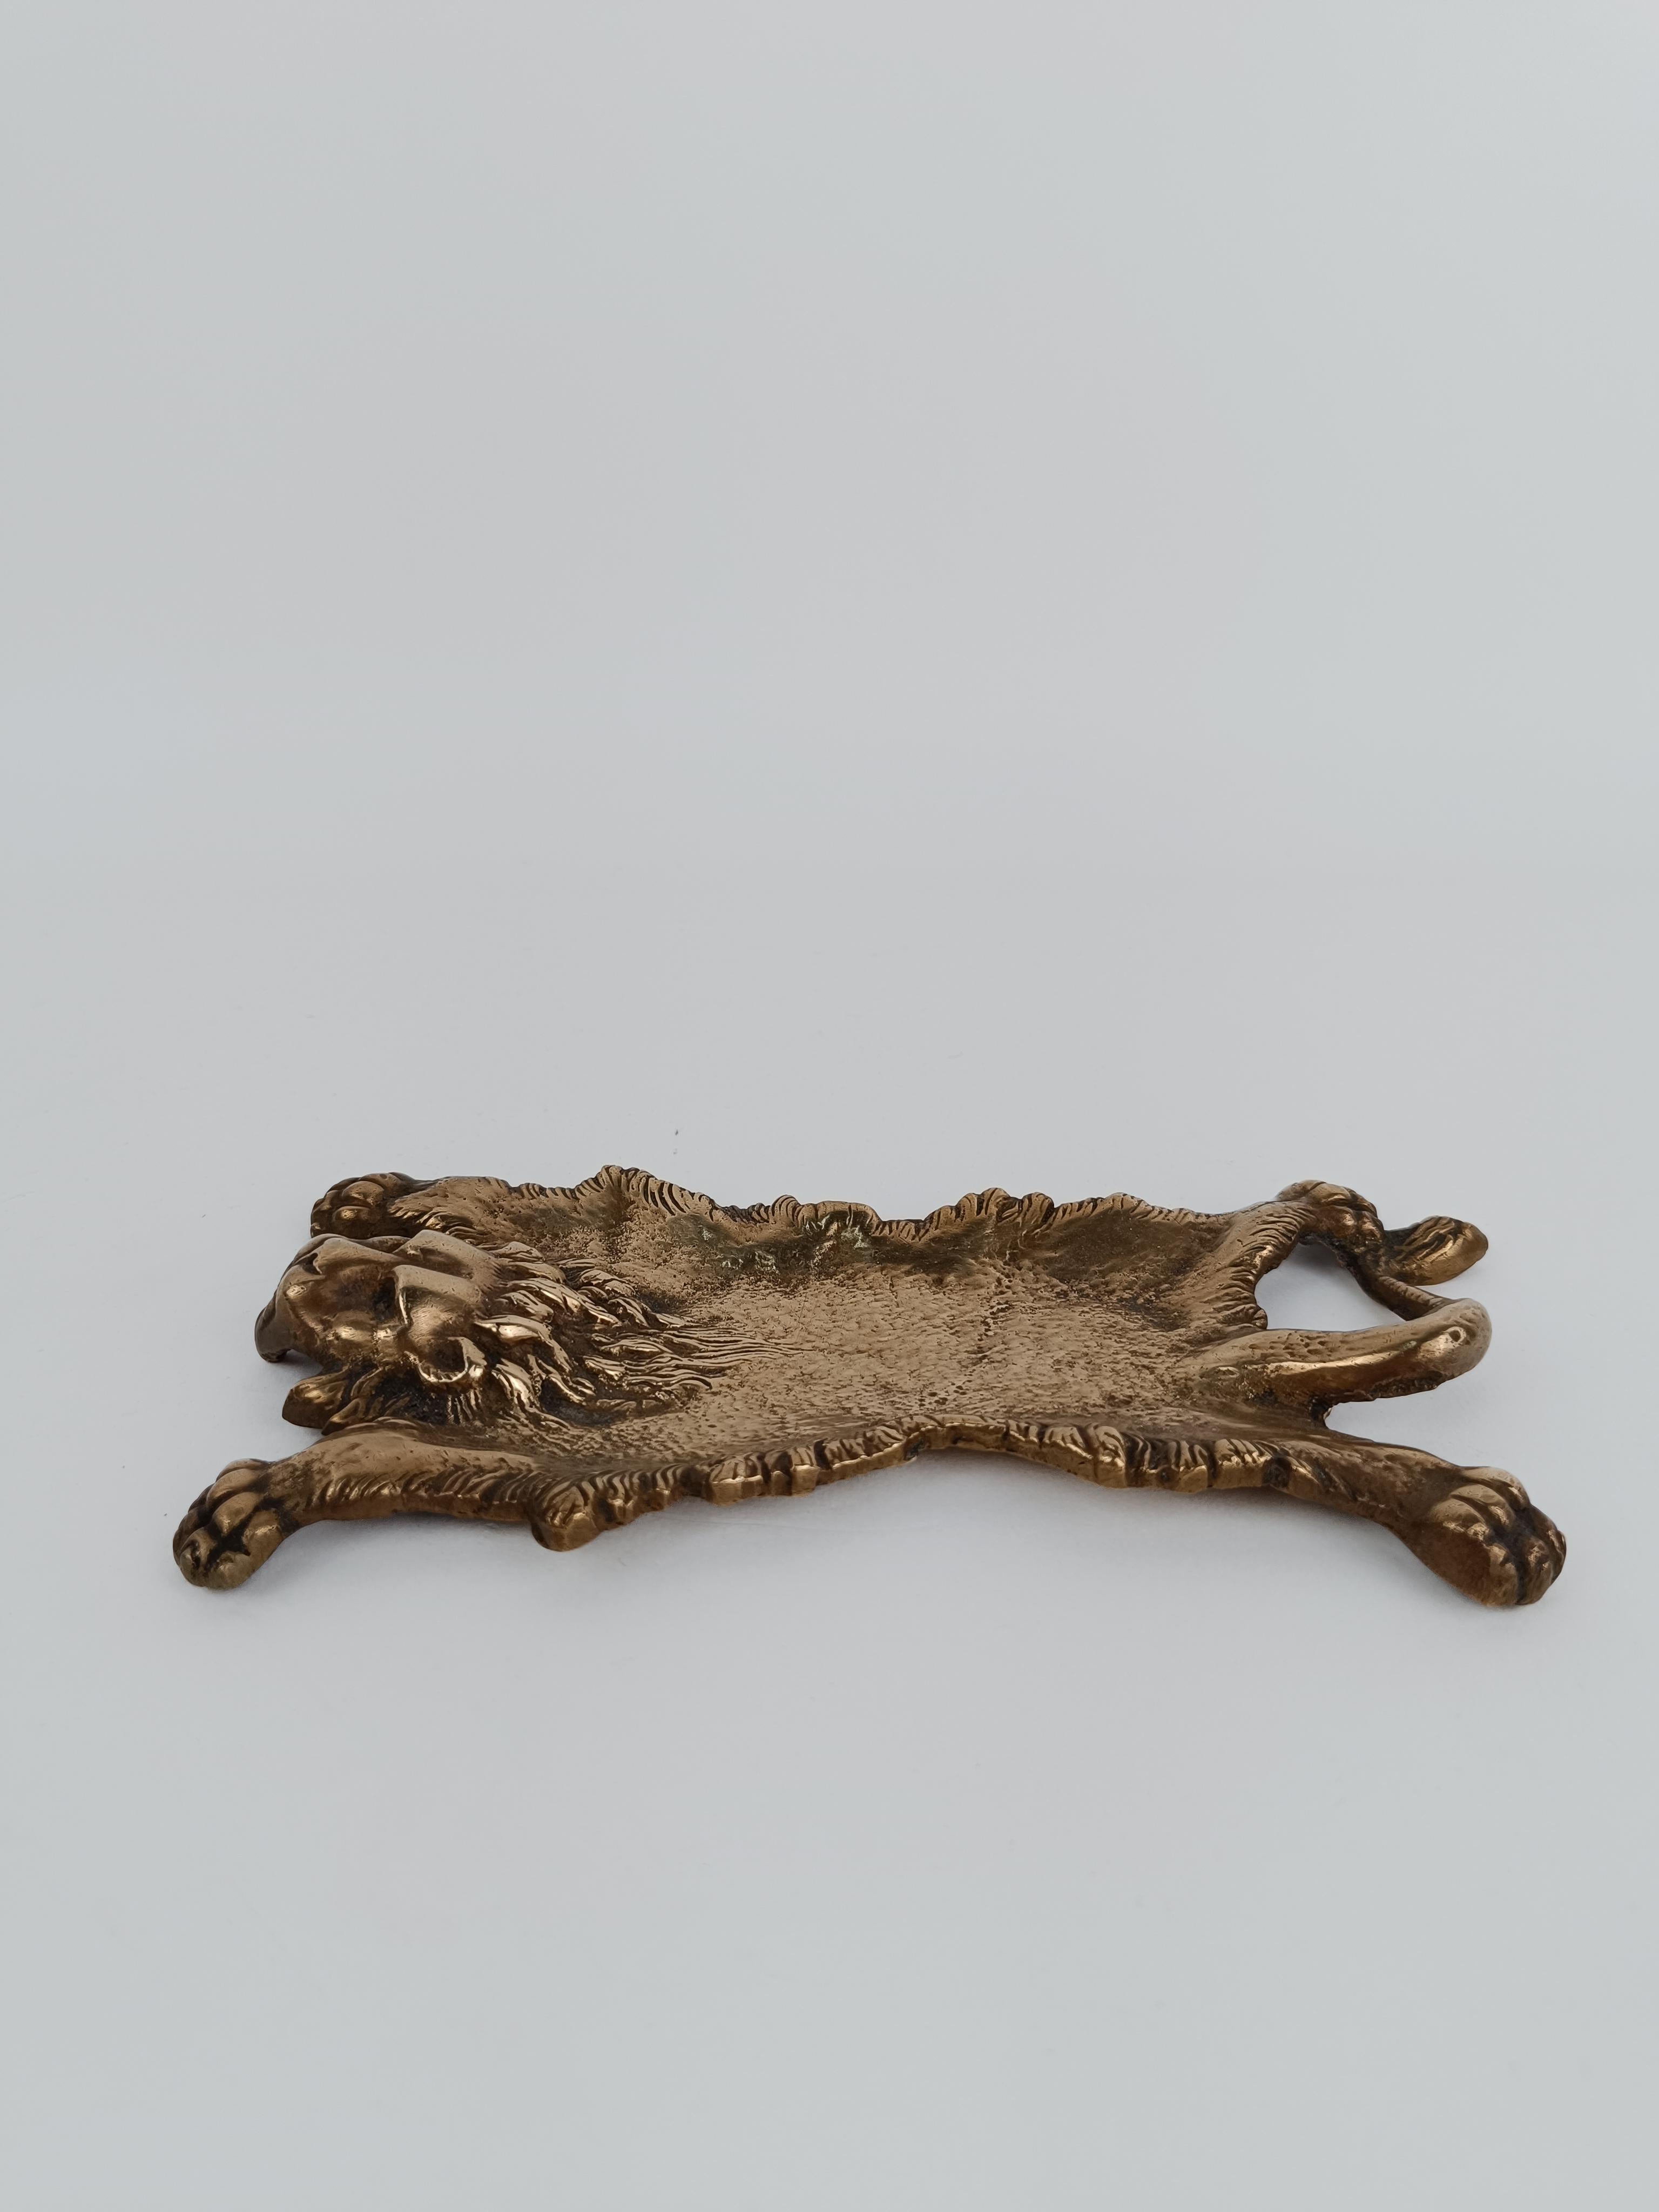 Vintage Brass Ashtray Depicting the Mythological Nemean Lion Skin, Italy 1970s For Sale 4